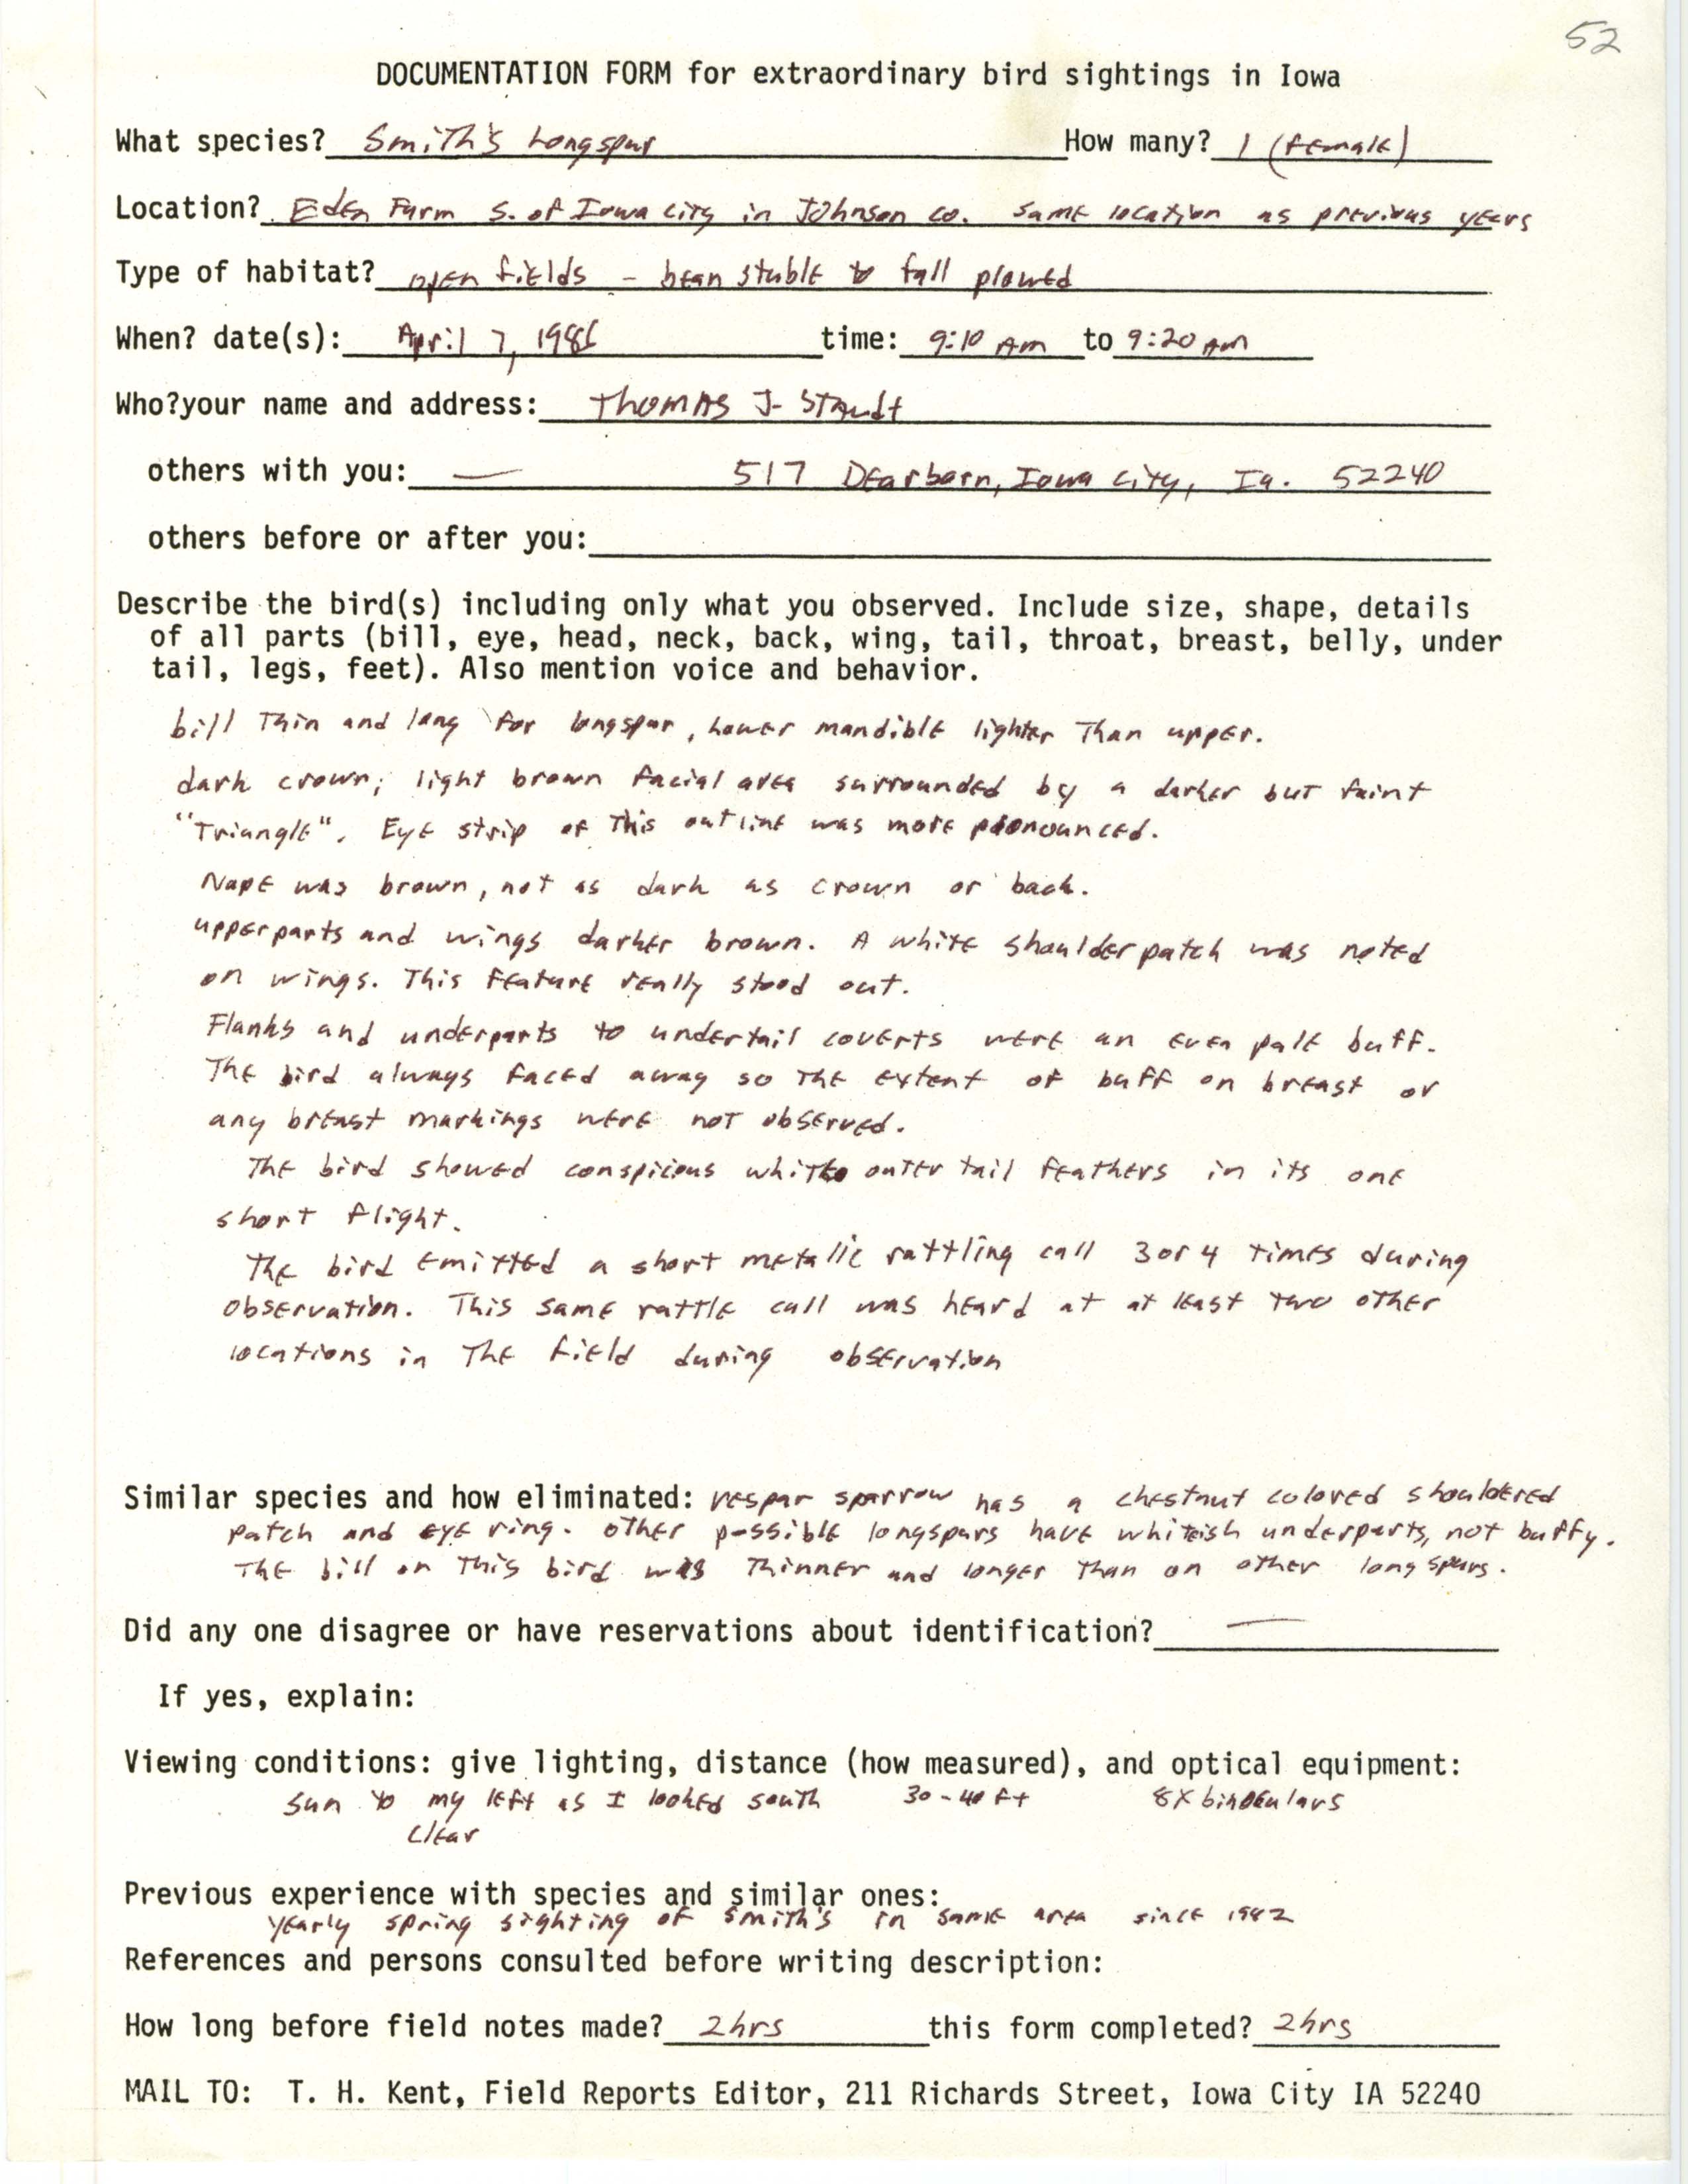 Rare bird documentation form for Smith's Longspur south of Iowa City, 1986